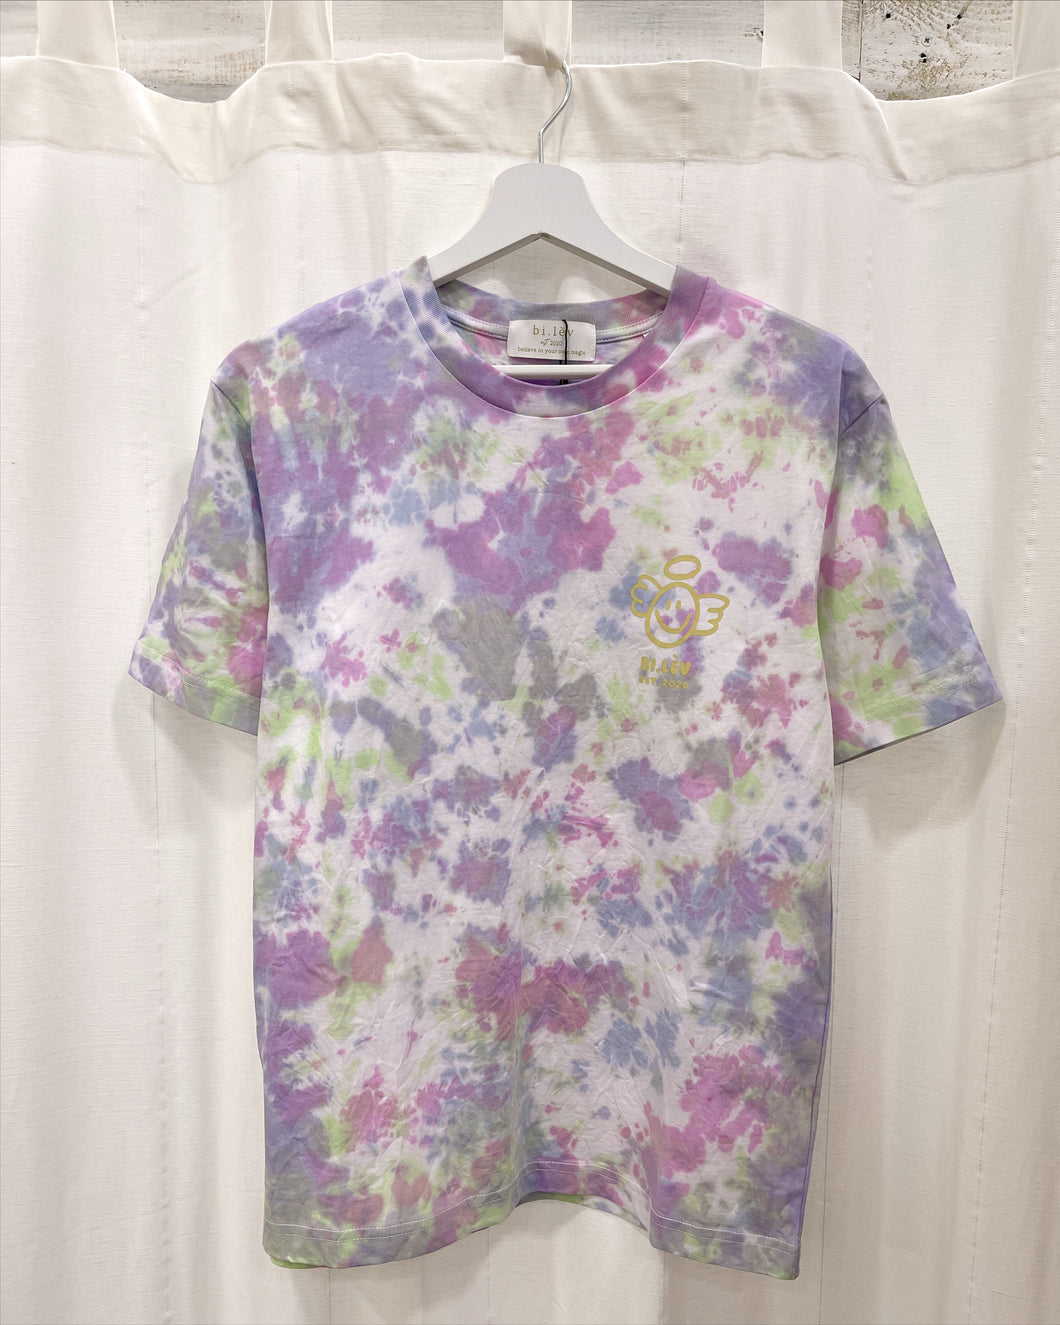 ANGEL COTTON CANDY - Tie Dye Organic Cotton T-shirt